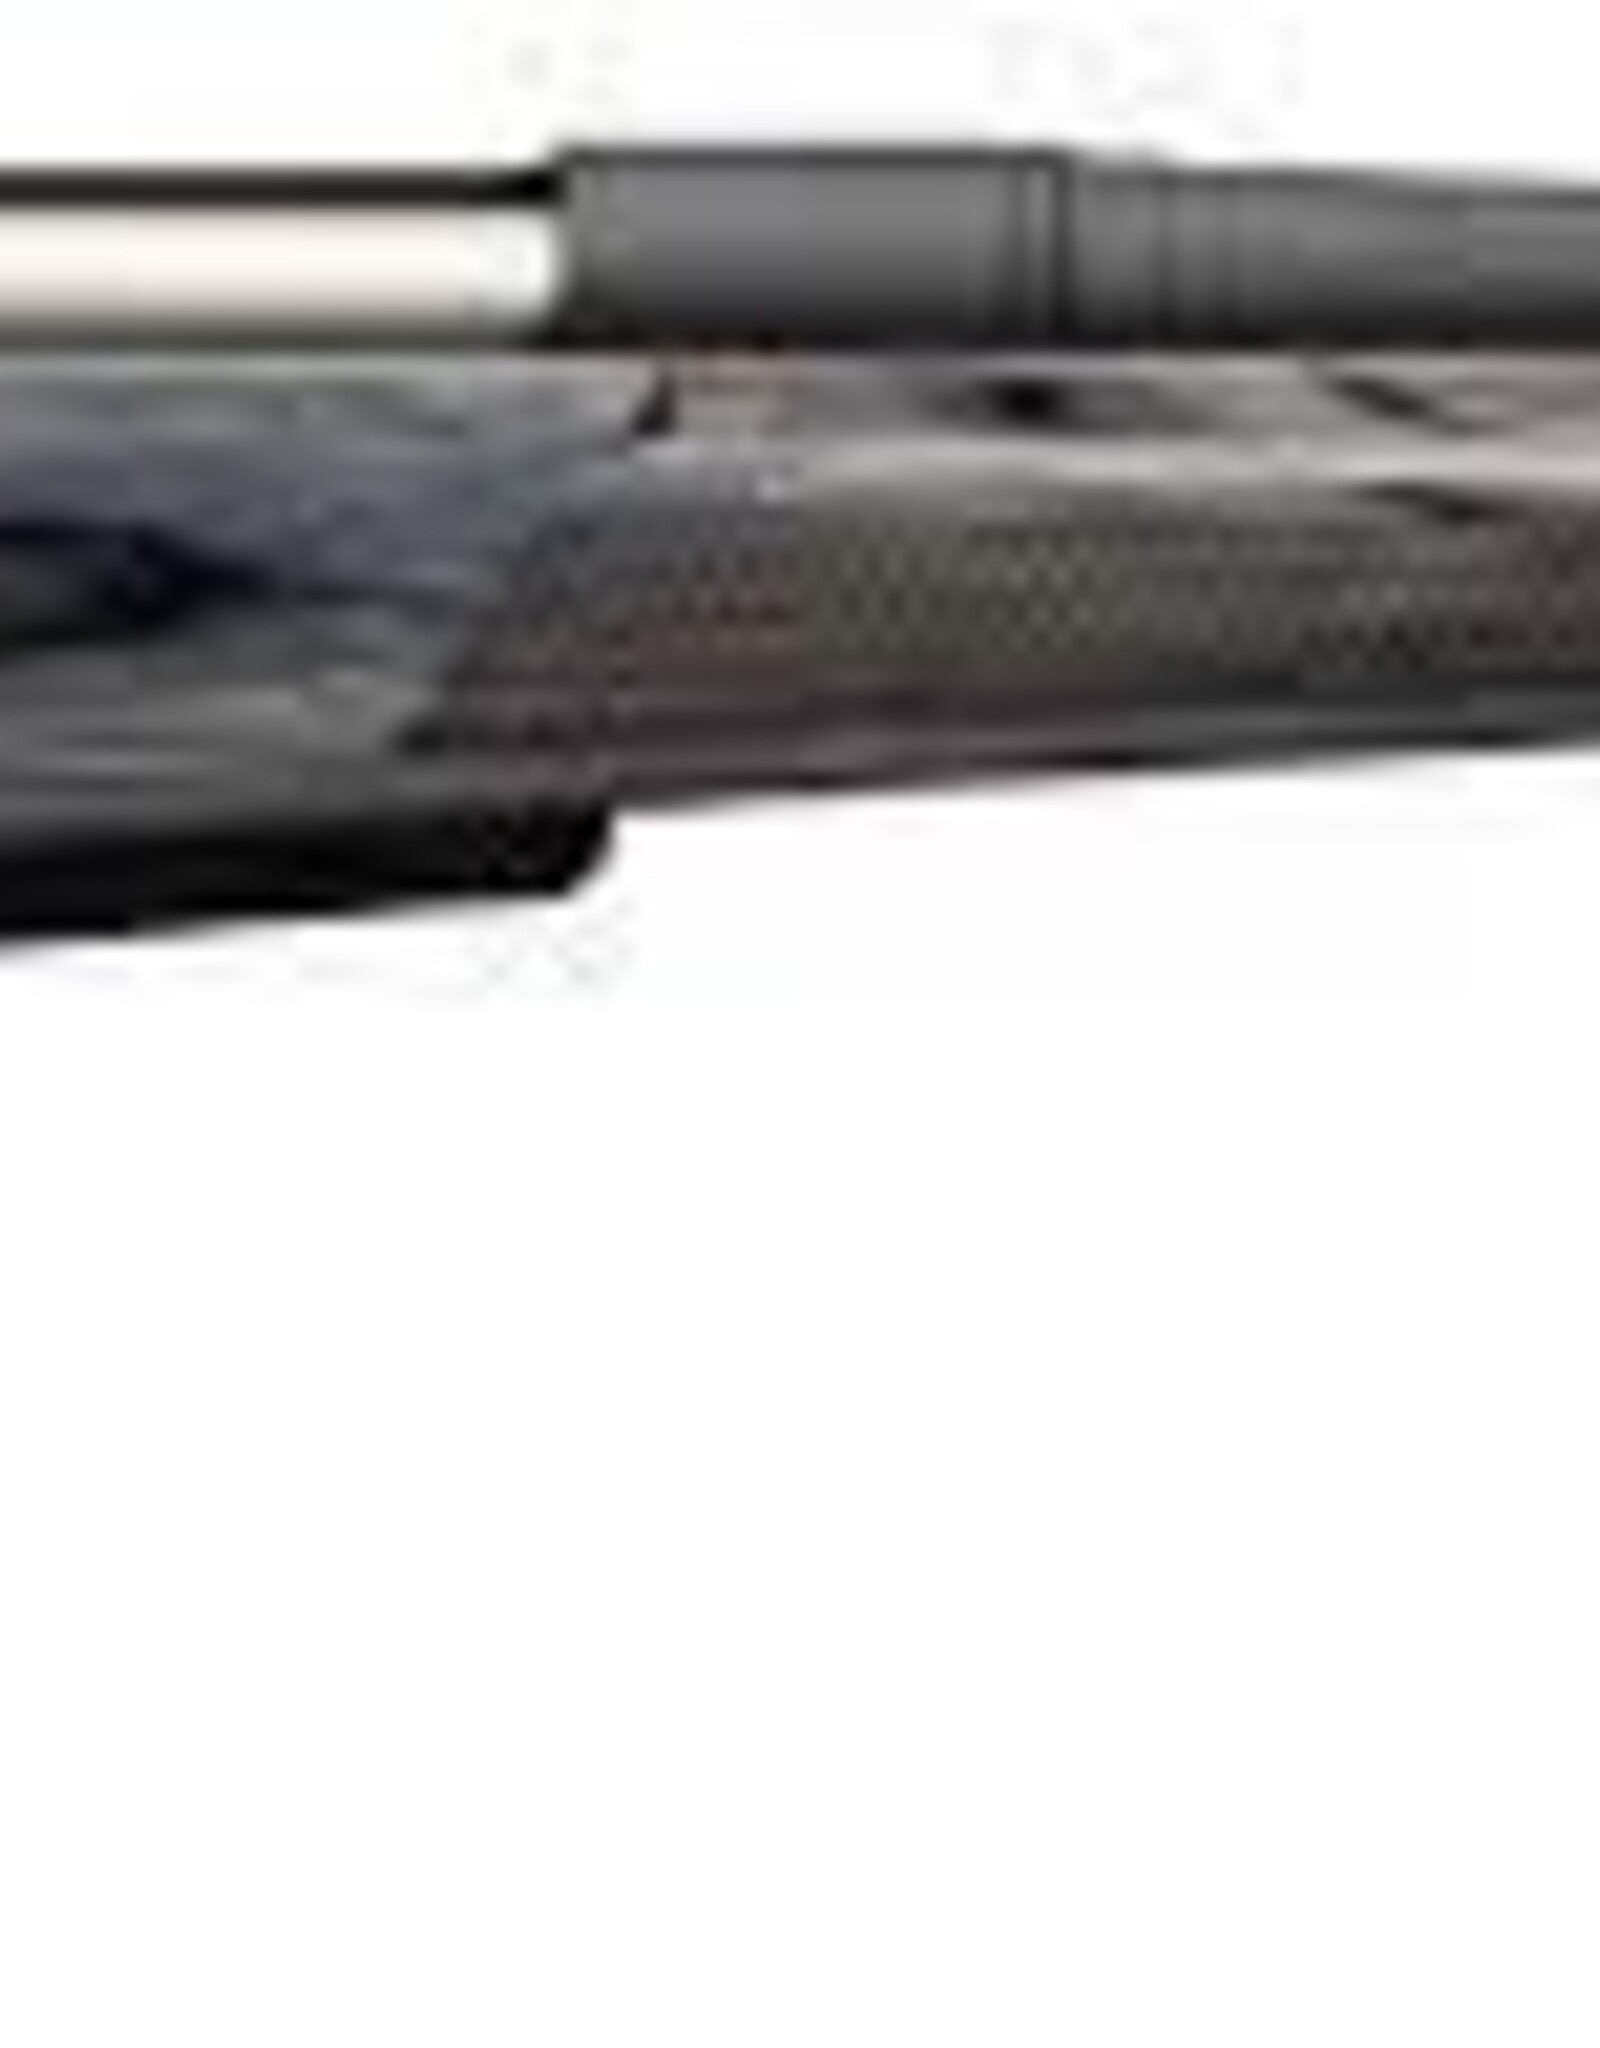 Winchester XPR Thumbhole Varmint